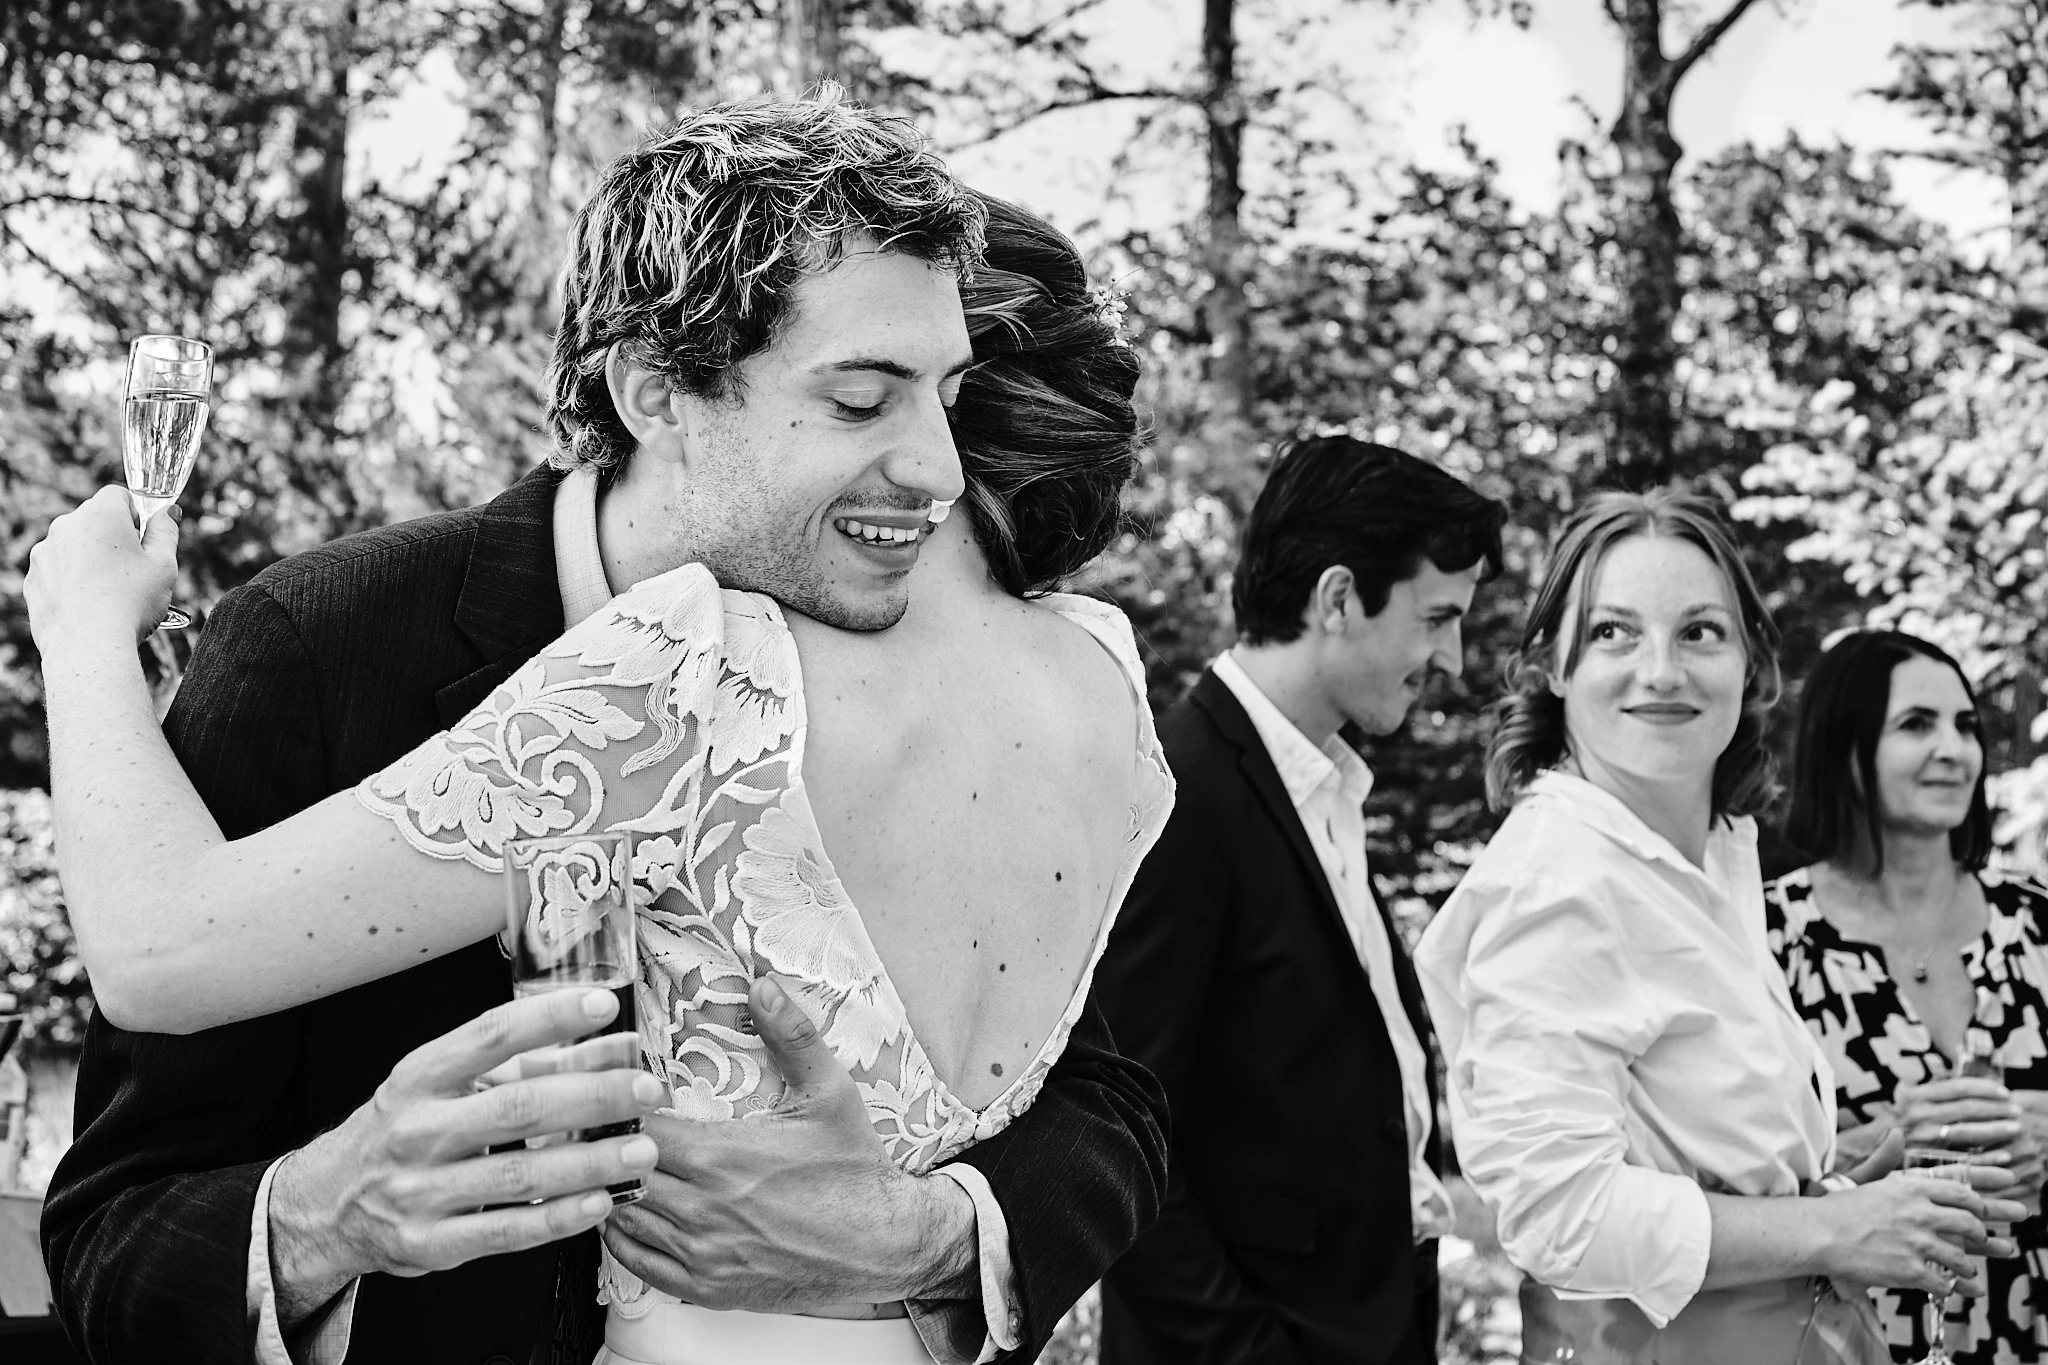 photographe documentaire de mariage nathalie marteau photographe mariage Nantes